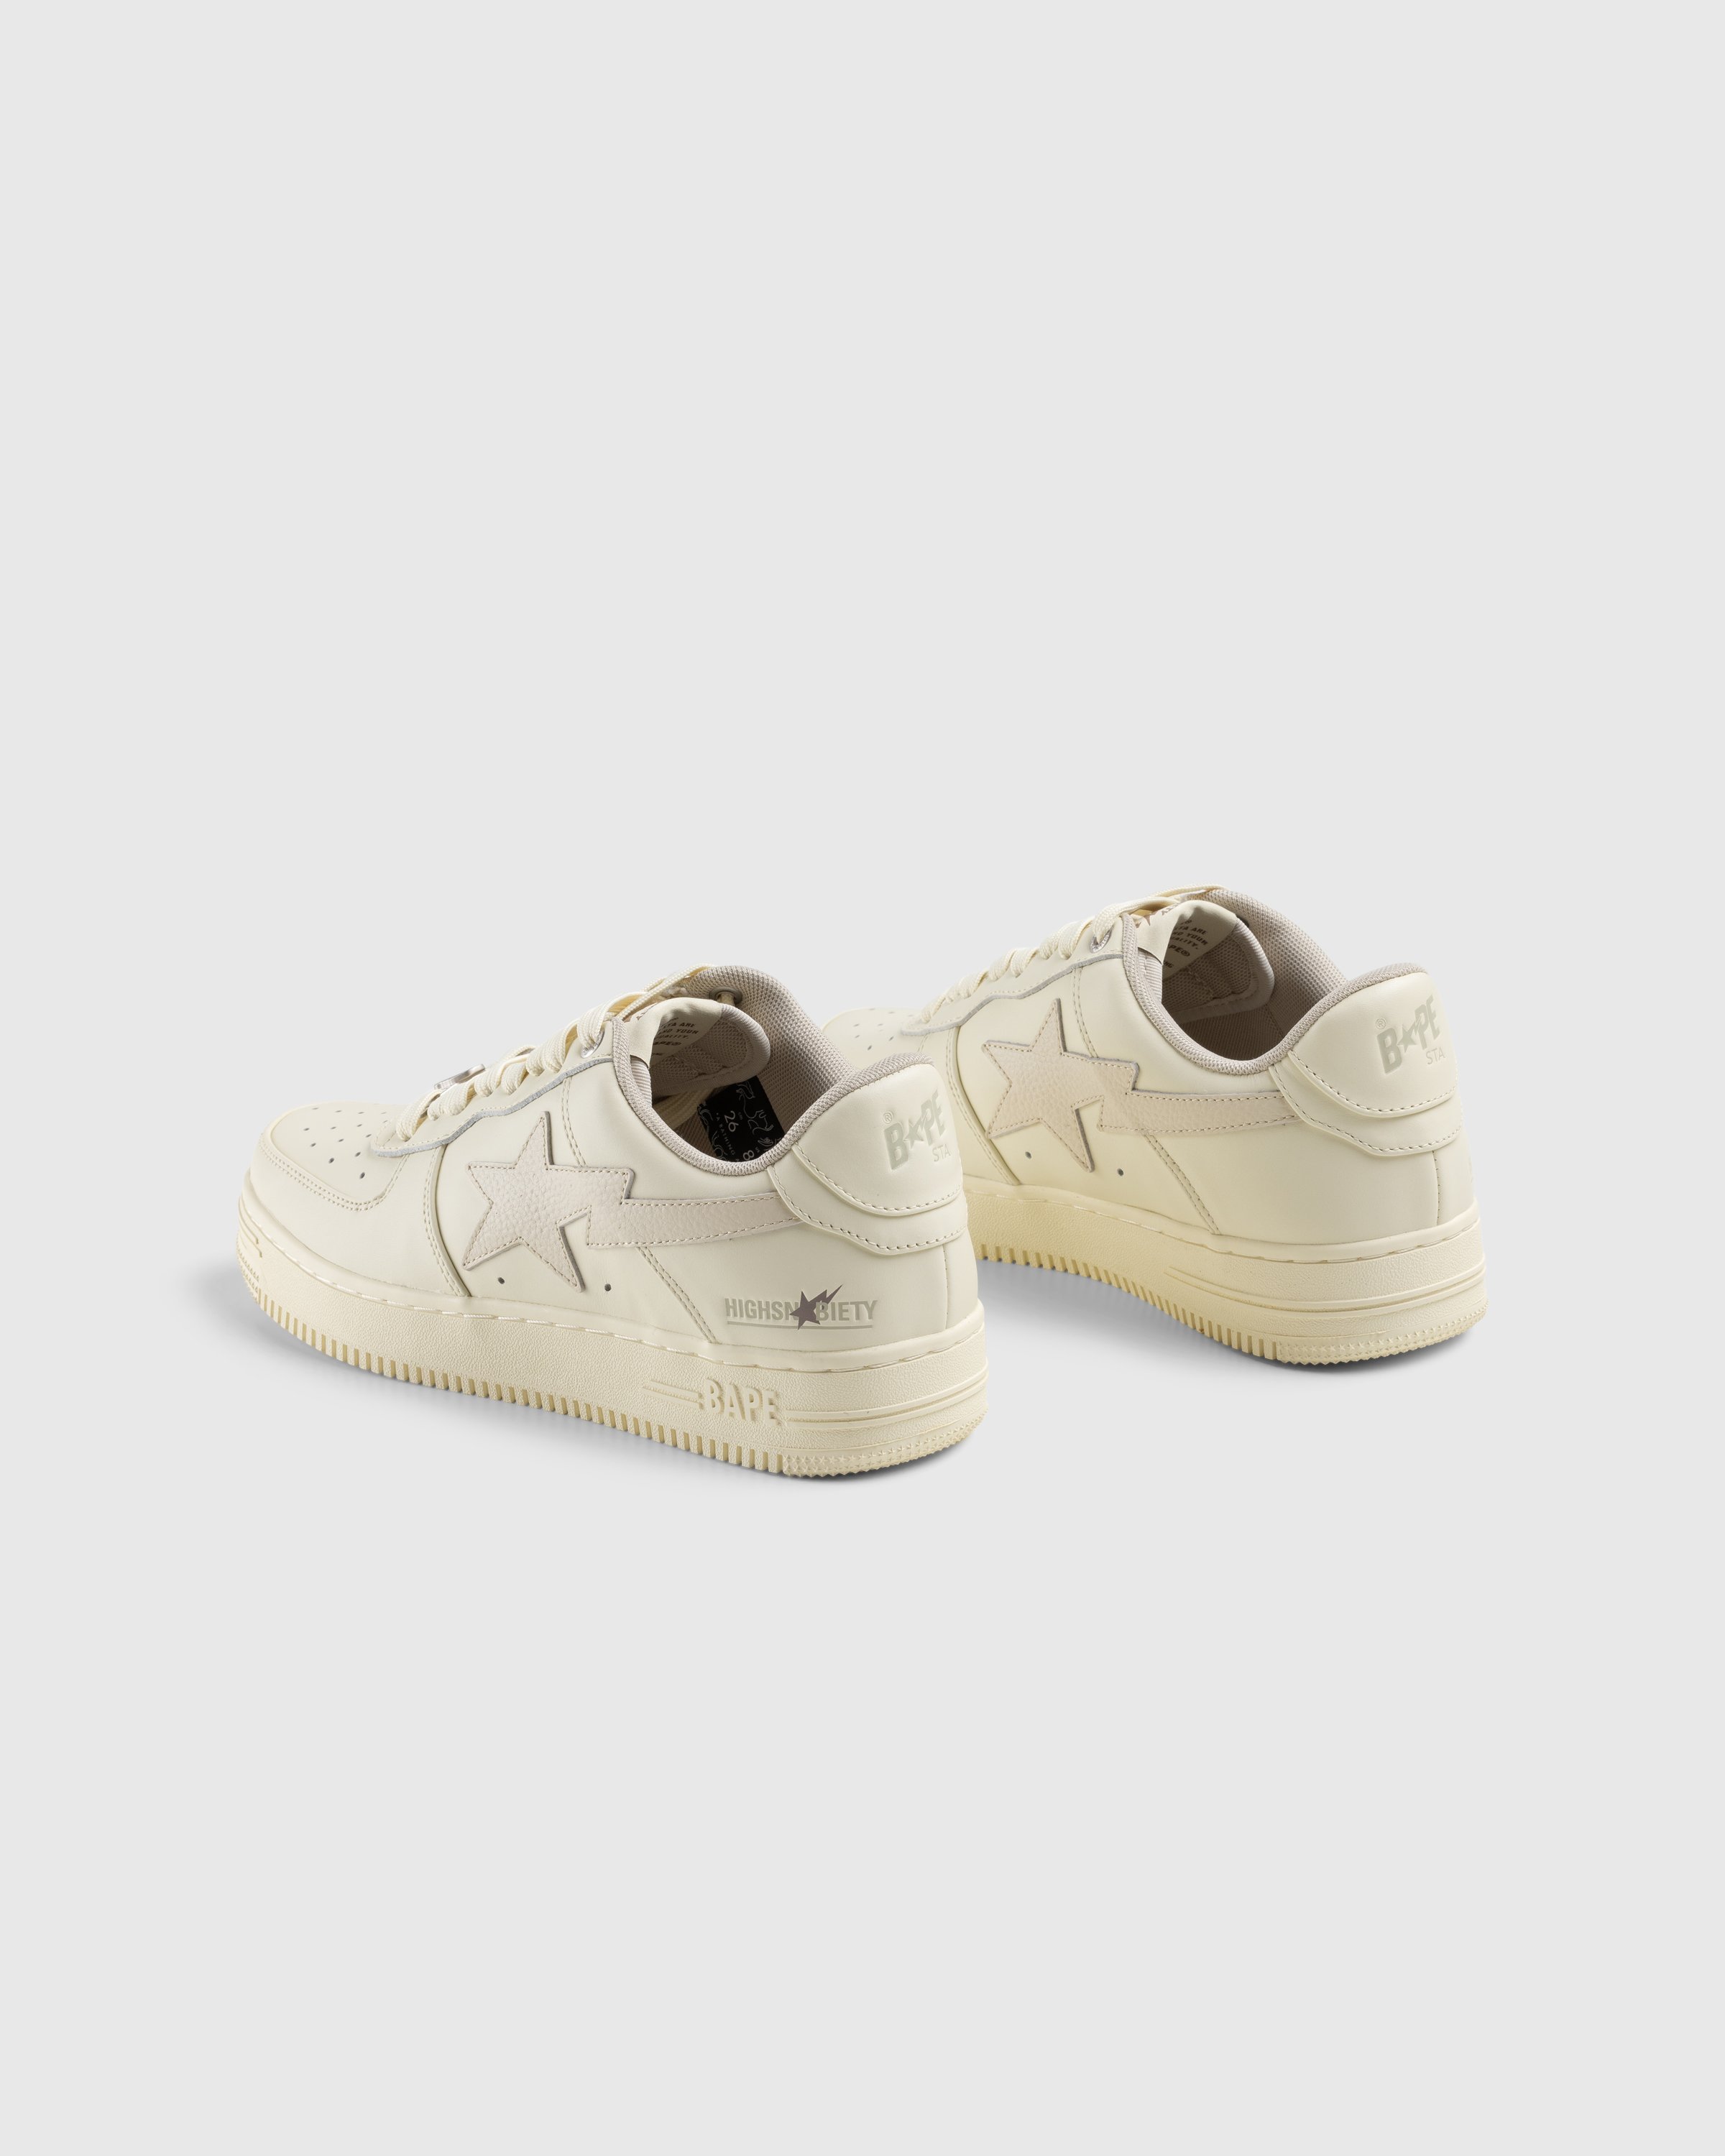 BAPE x Highsnobiety - BAPE STA Ivory - Footwear - BEIGE - Image 4